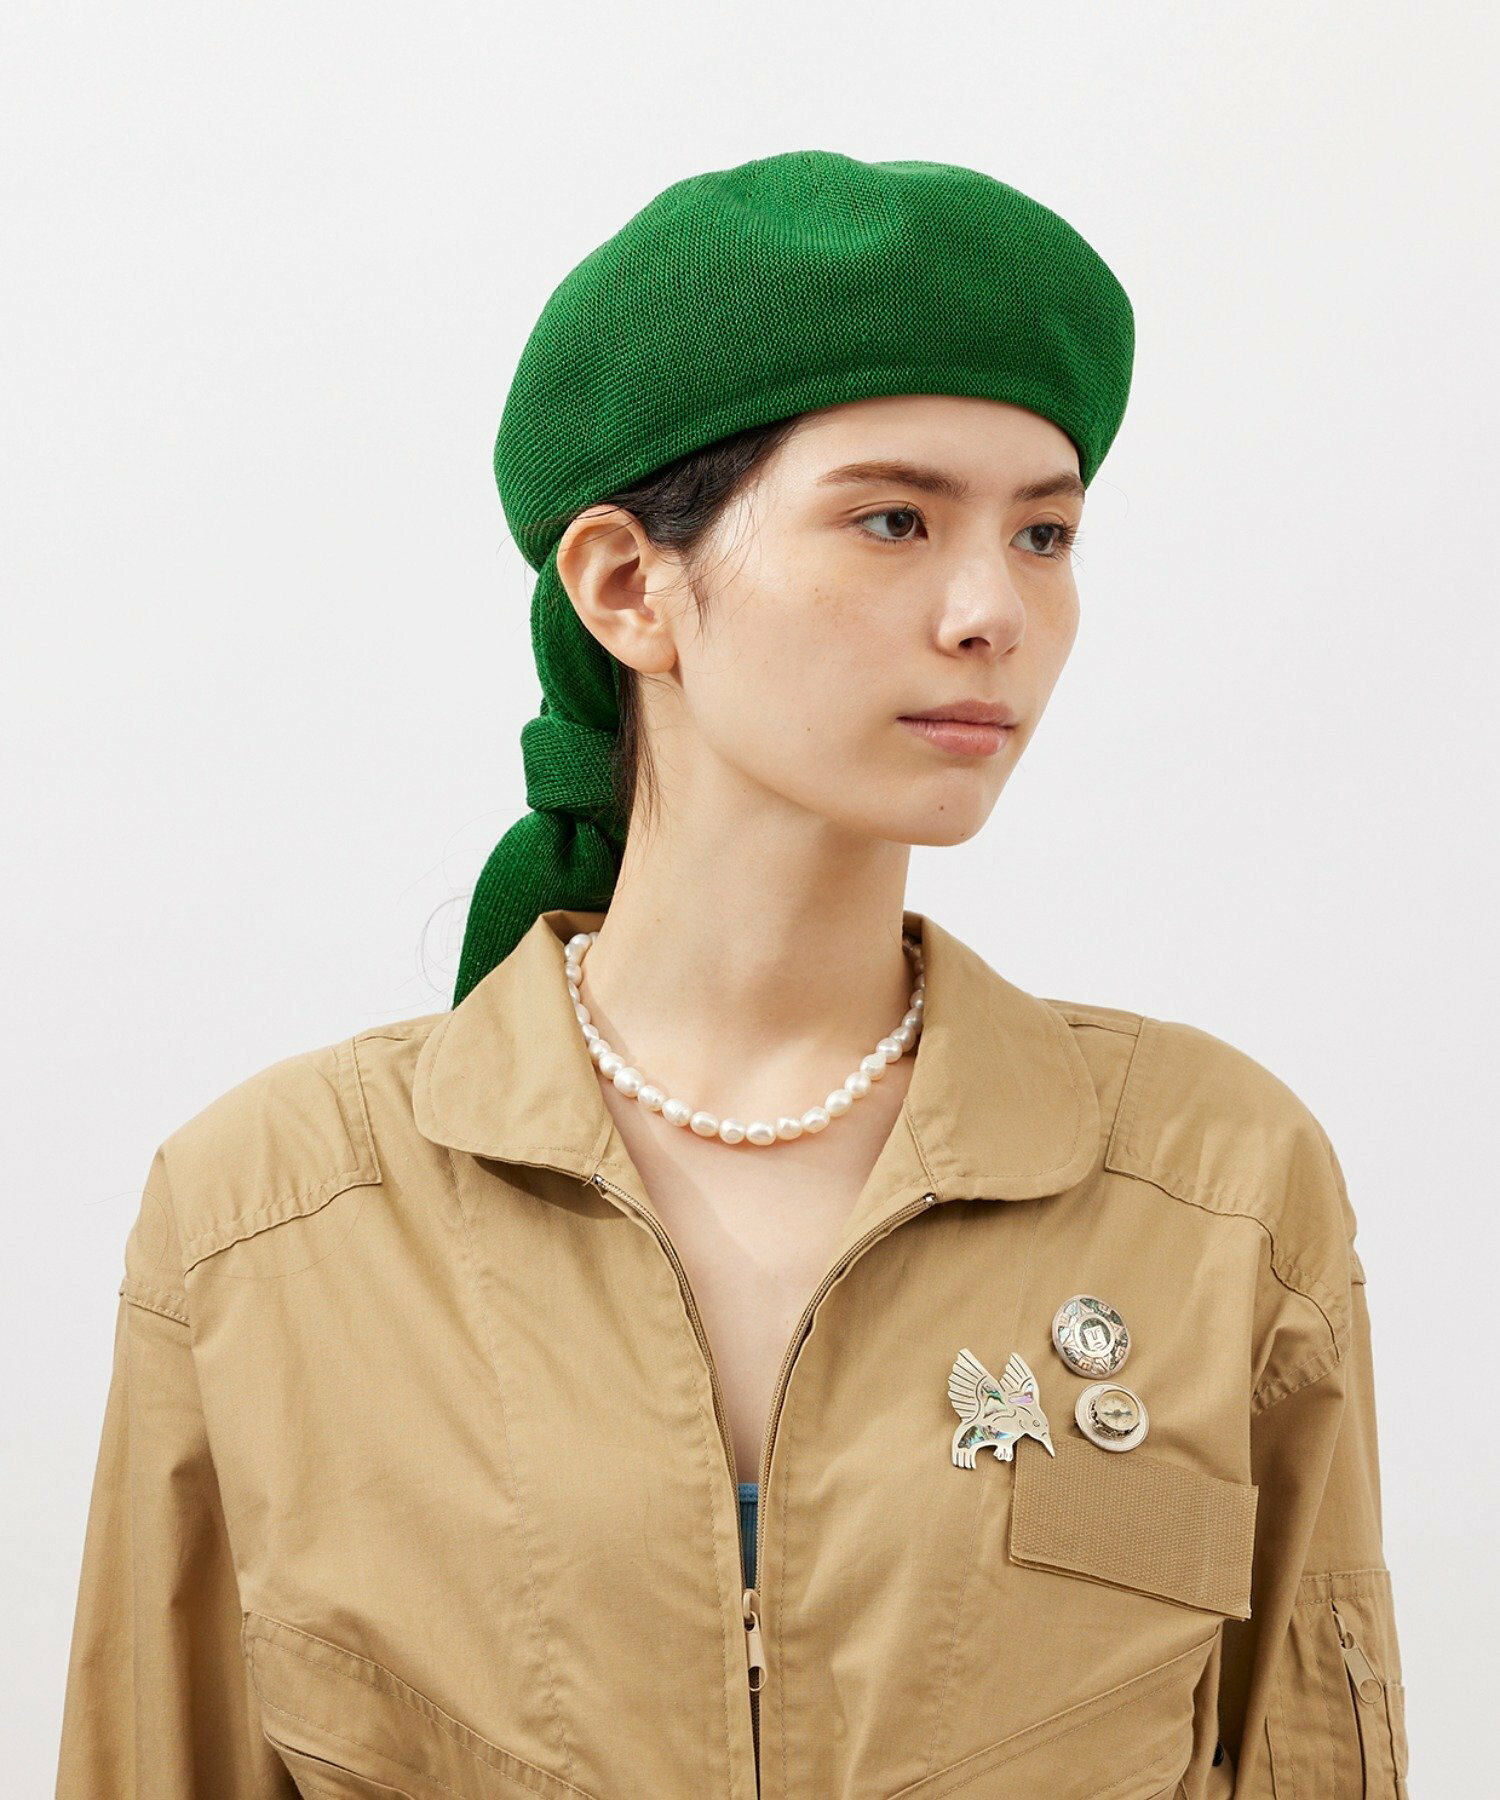 La Maison de Lyllis/(U)WU ウー ニットスカーフ付きベレー帽 MADE IN JAPAN 日本製 ラメゾンドリリス 2241022